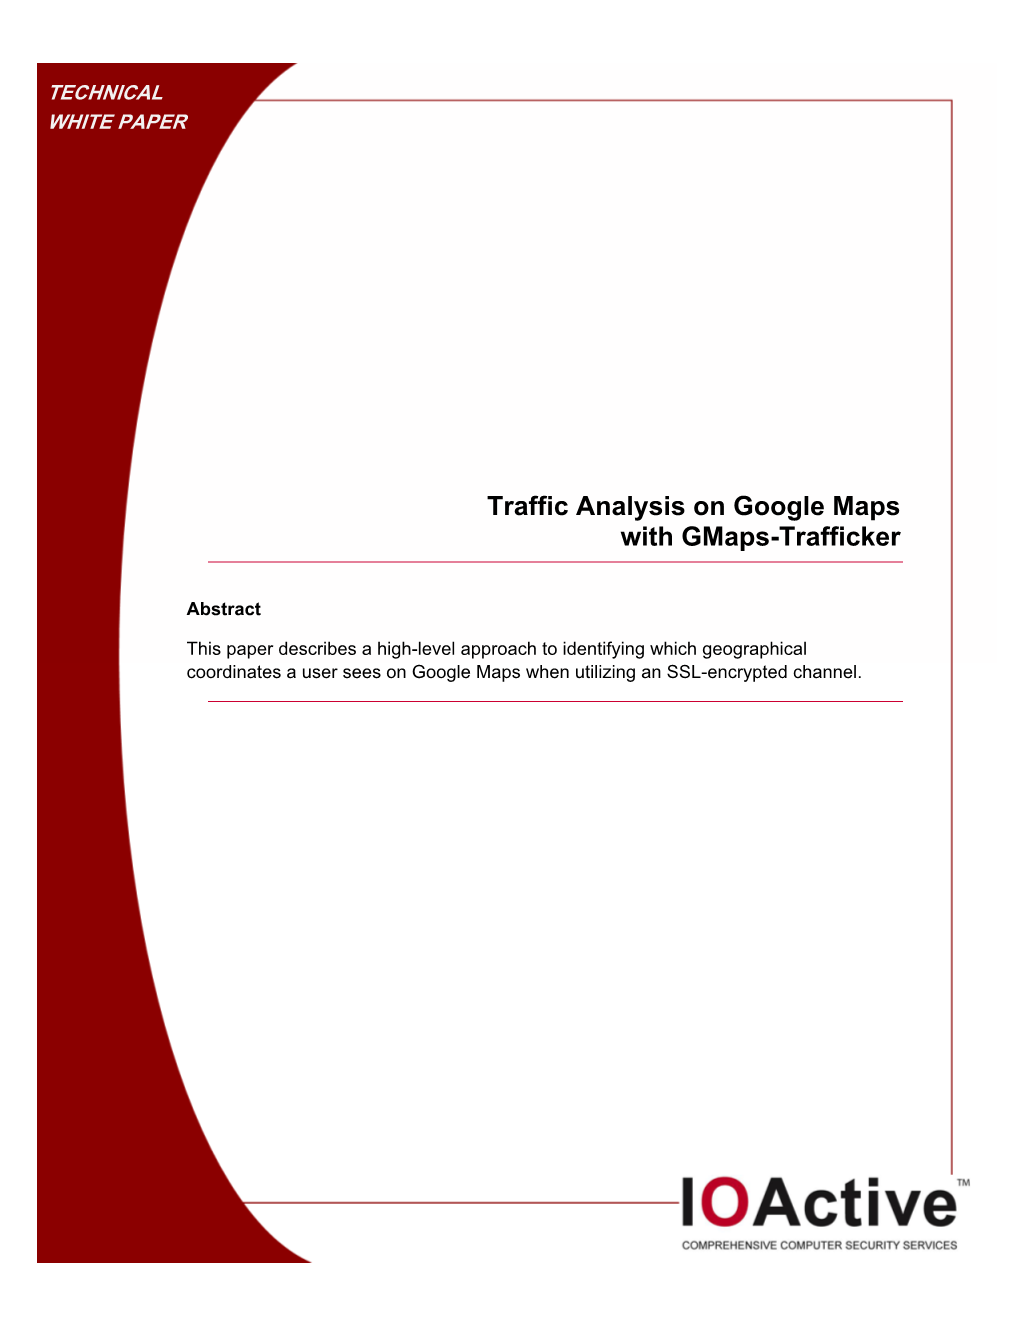 Traffic Analysis on Google Maps with Gmaps-Trafficker